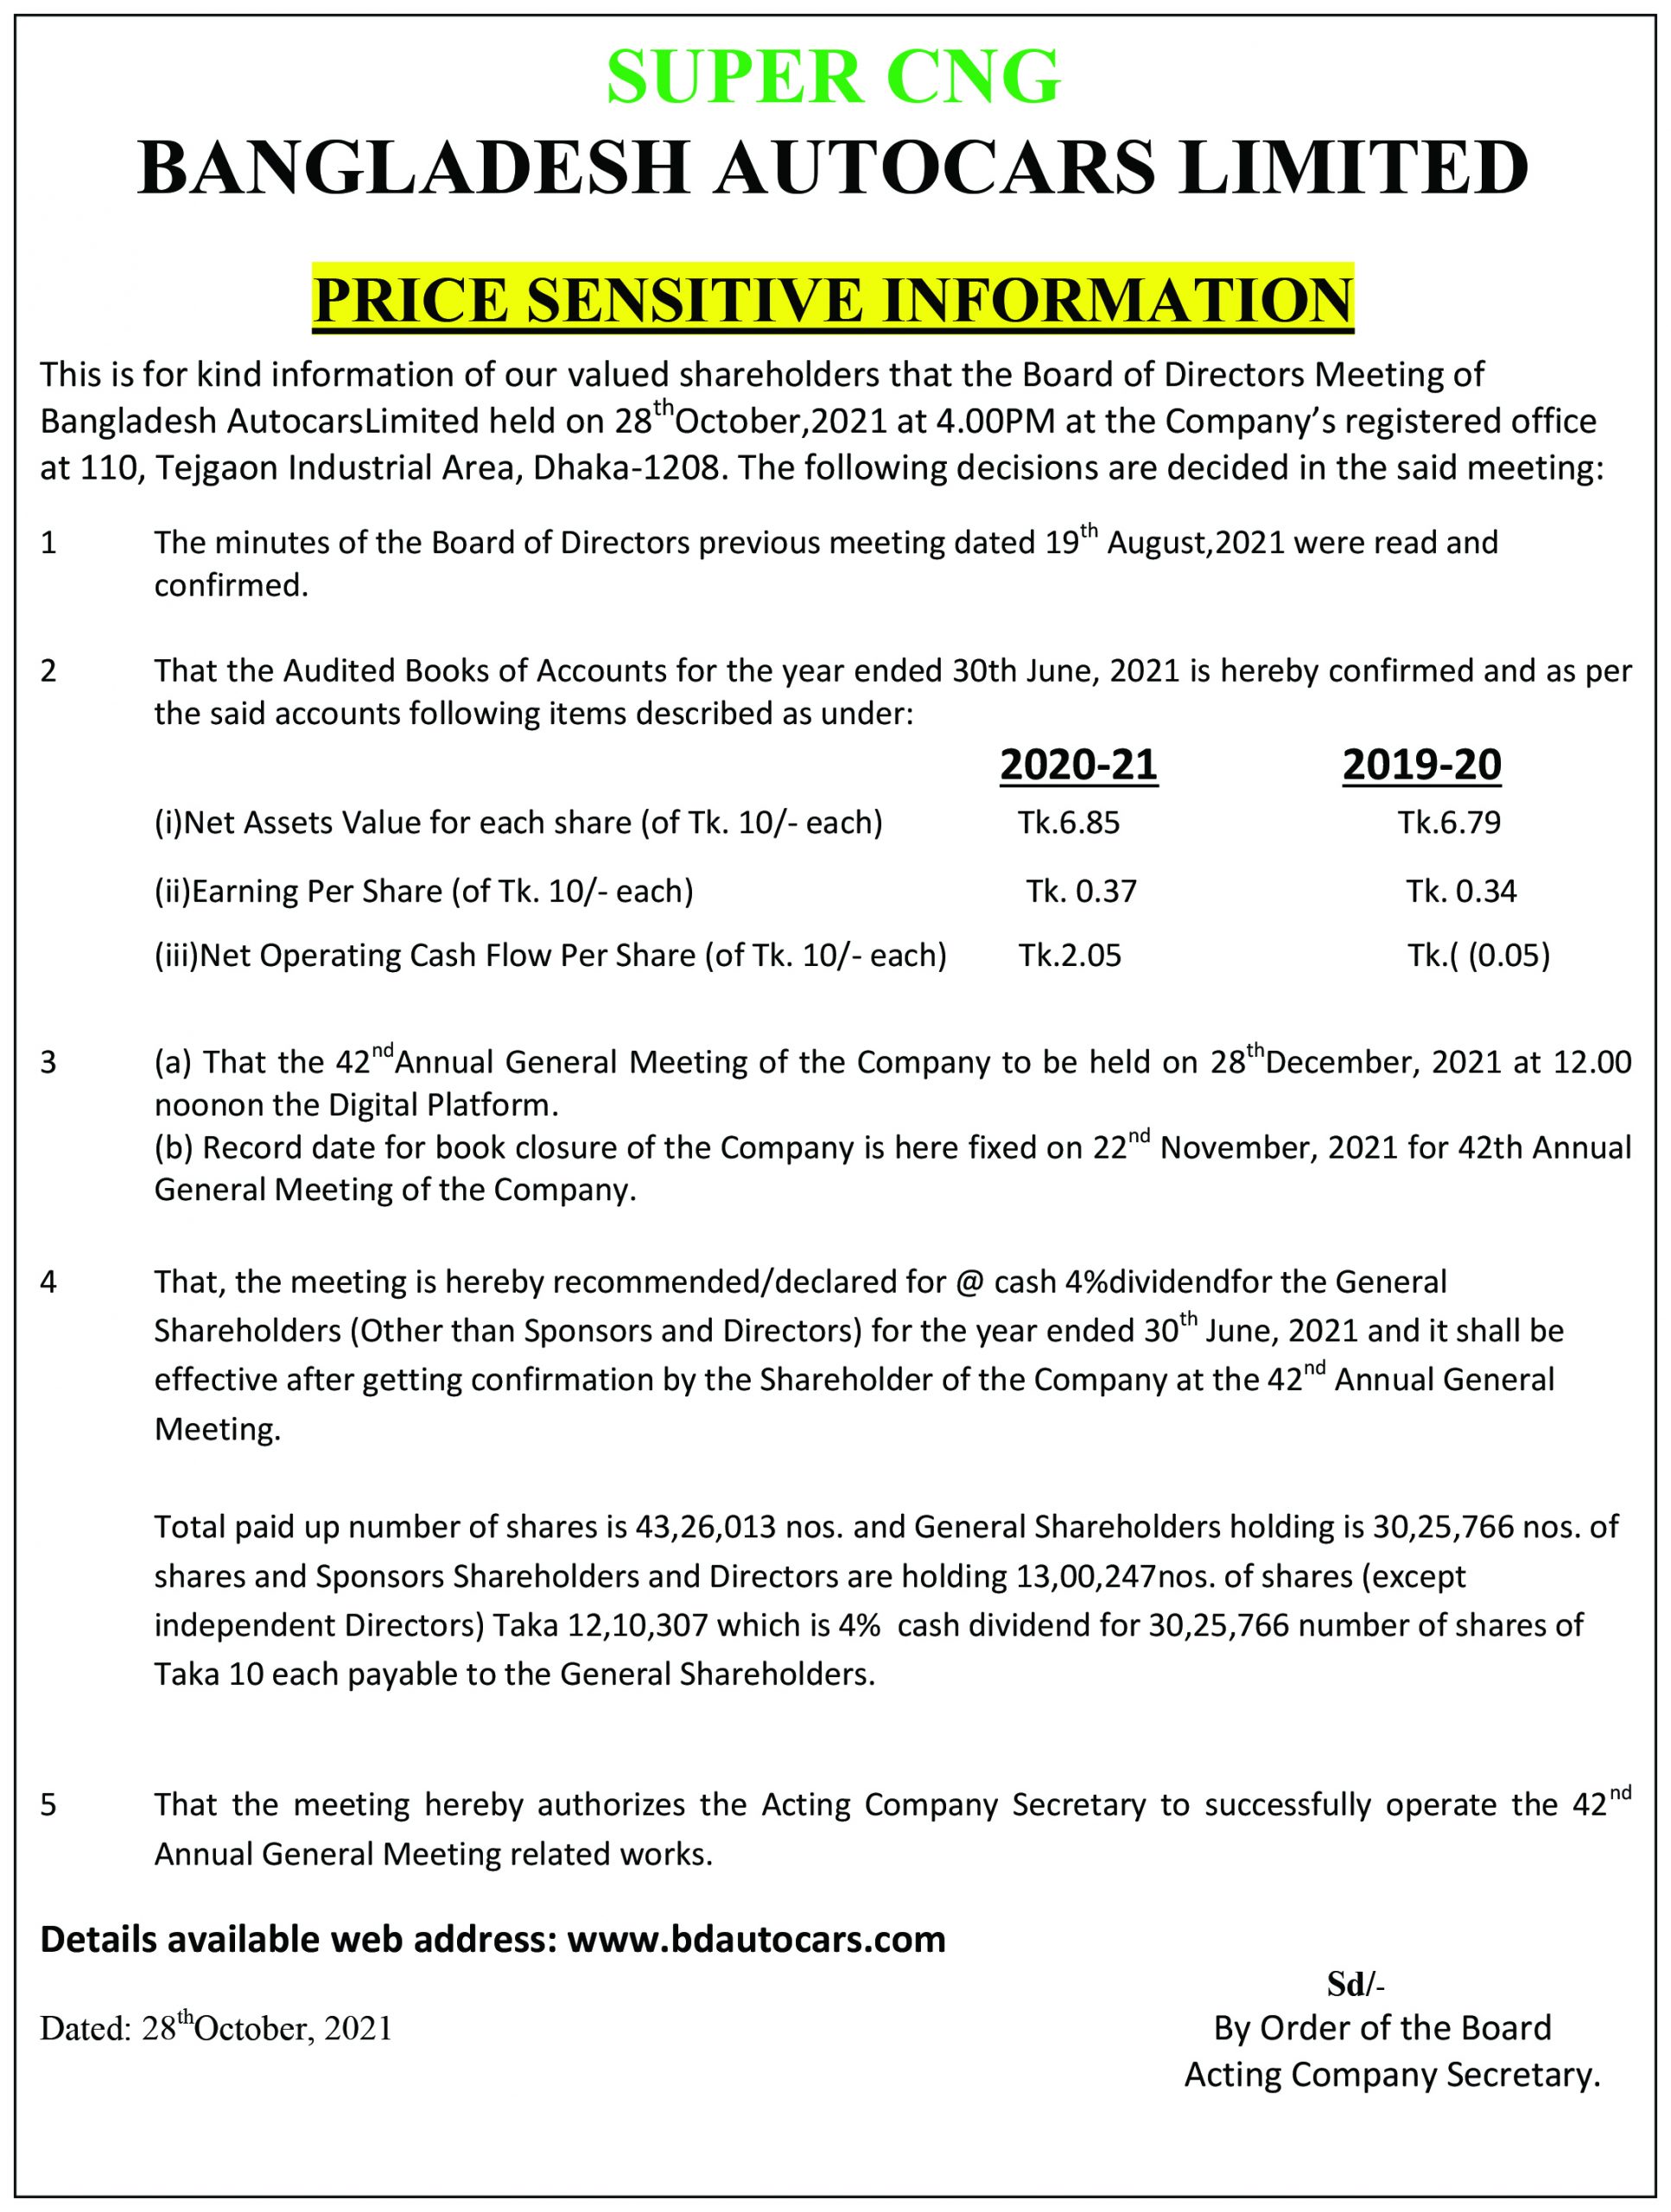 Price Sensitive Information of Bangladesh Autocars Limited